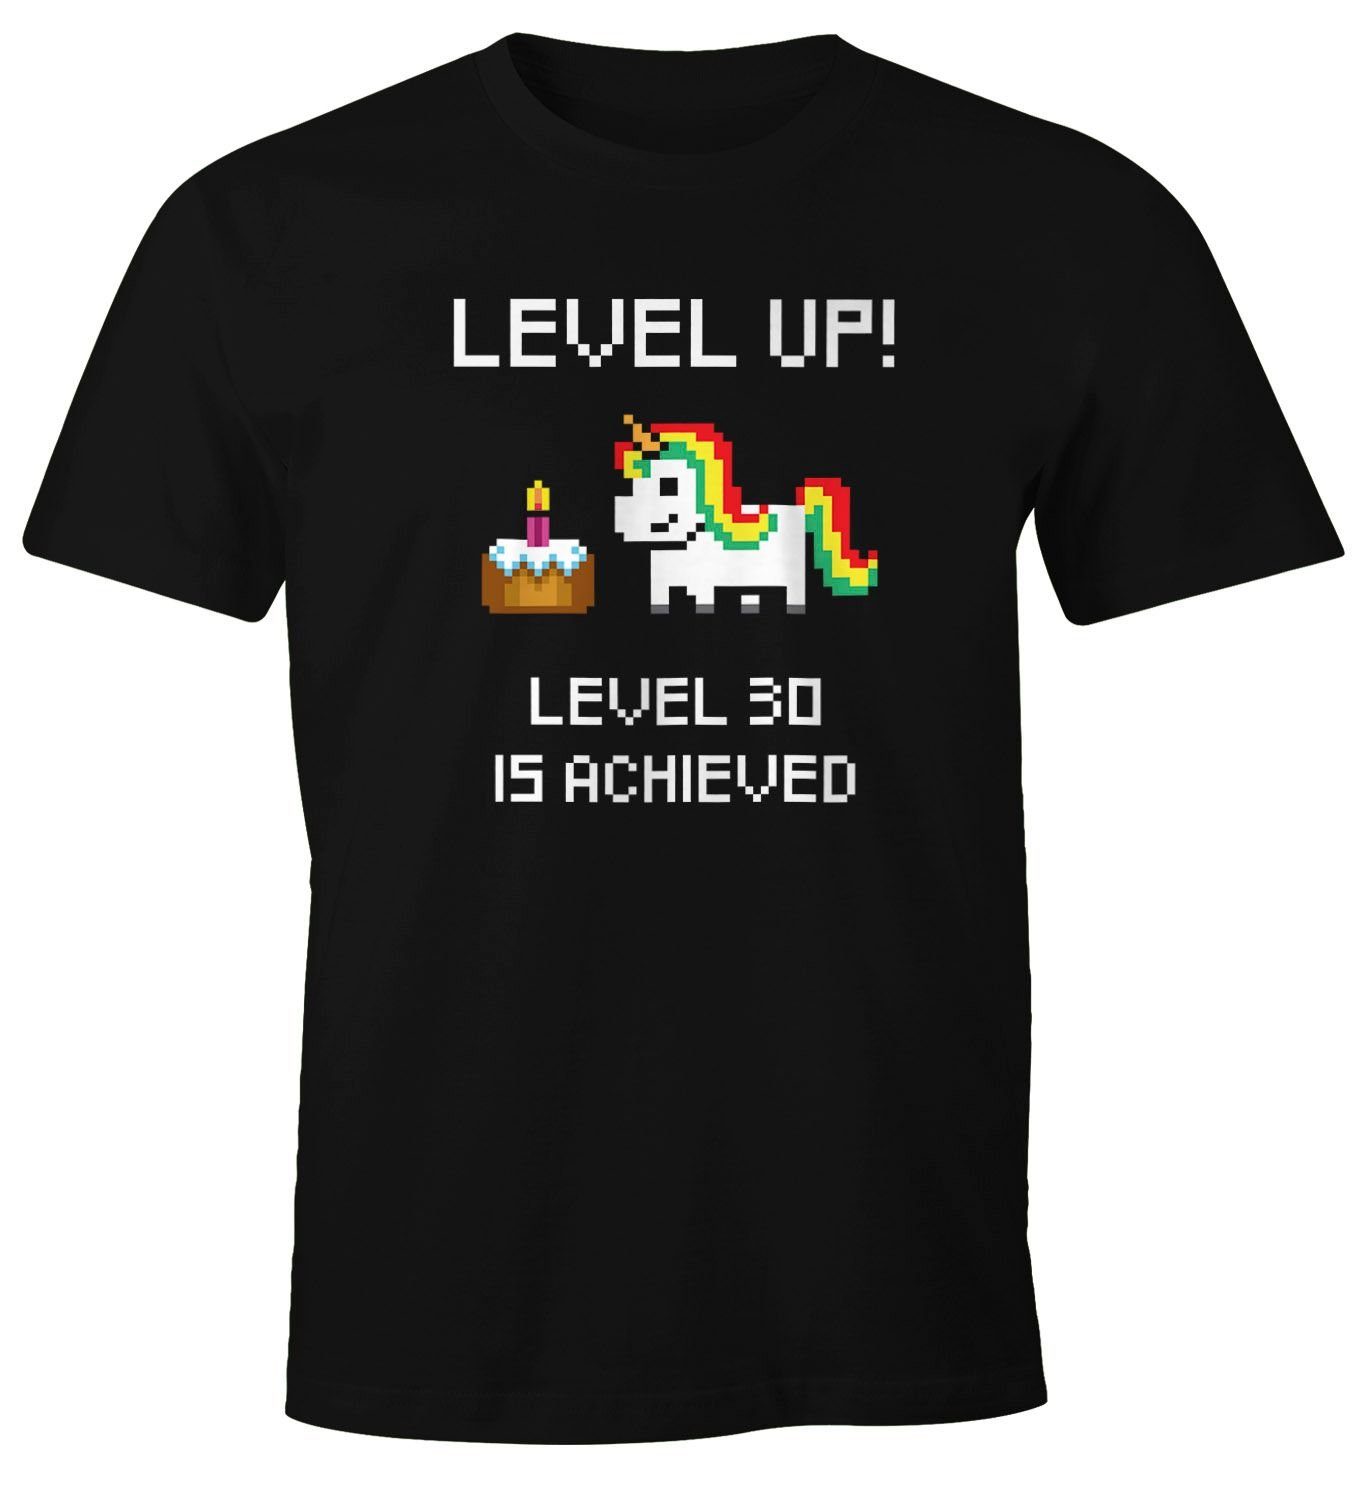 MoonWorks Print-Shirt Herren T-Shirt Geburtstag Level Up Pixel-Einhorn Torte Retro Gamer Pixelgrafik Geschenk Arcade Fun-Shirt Moonworks® mit Print 30 schwarz